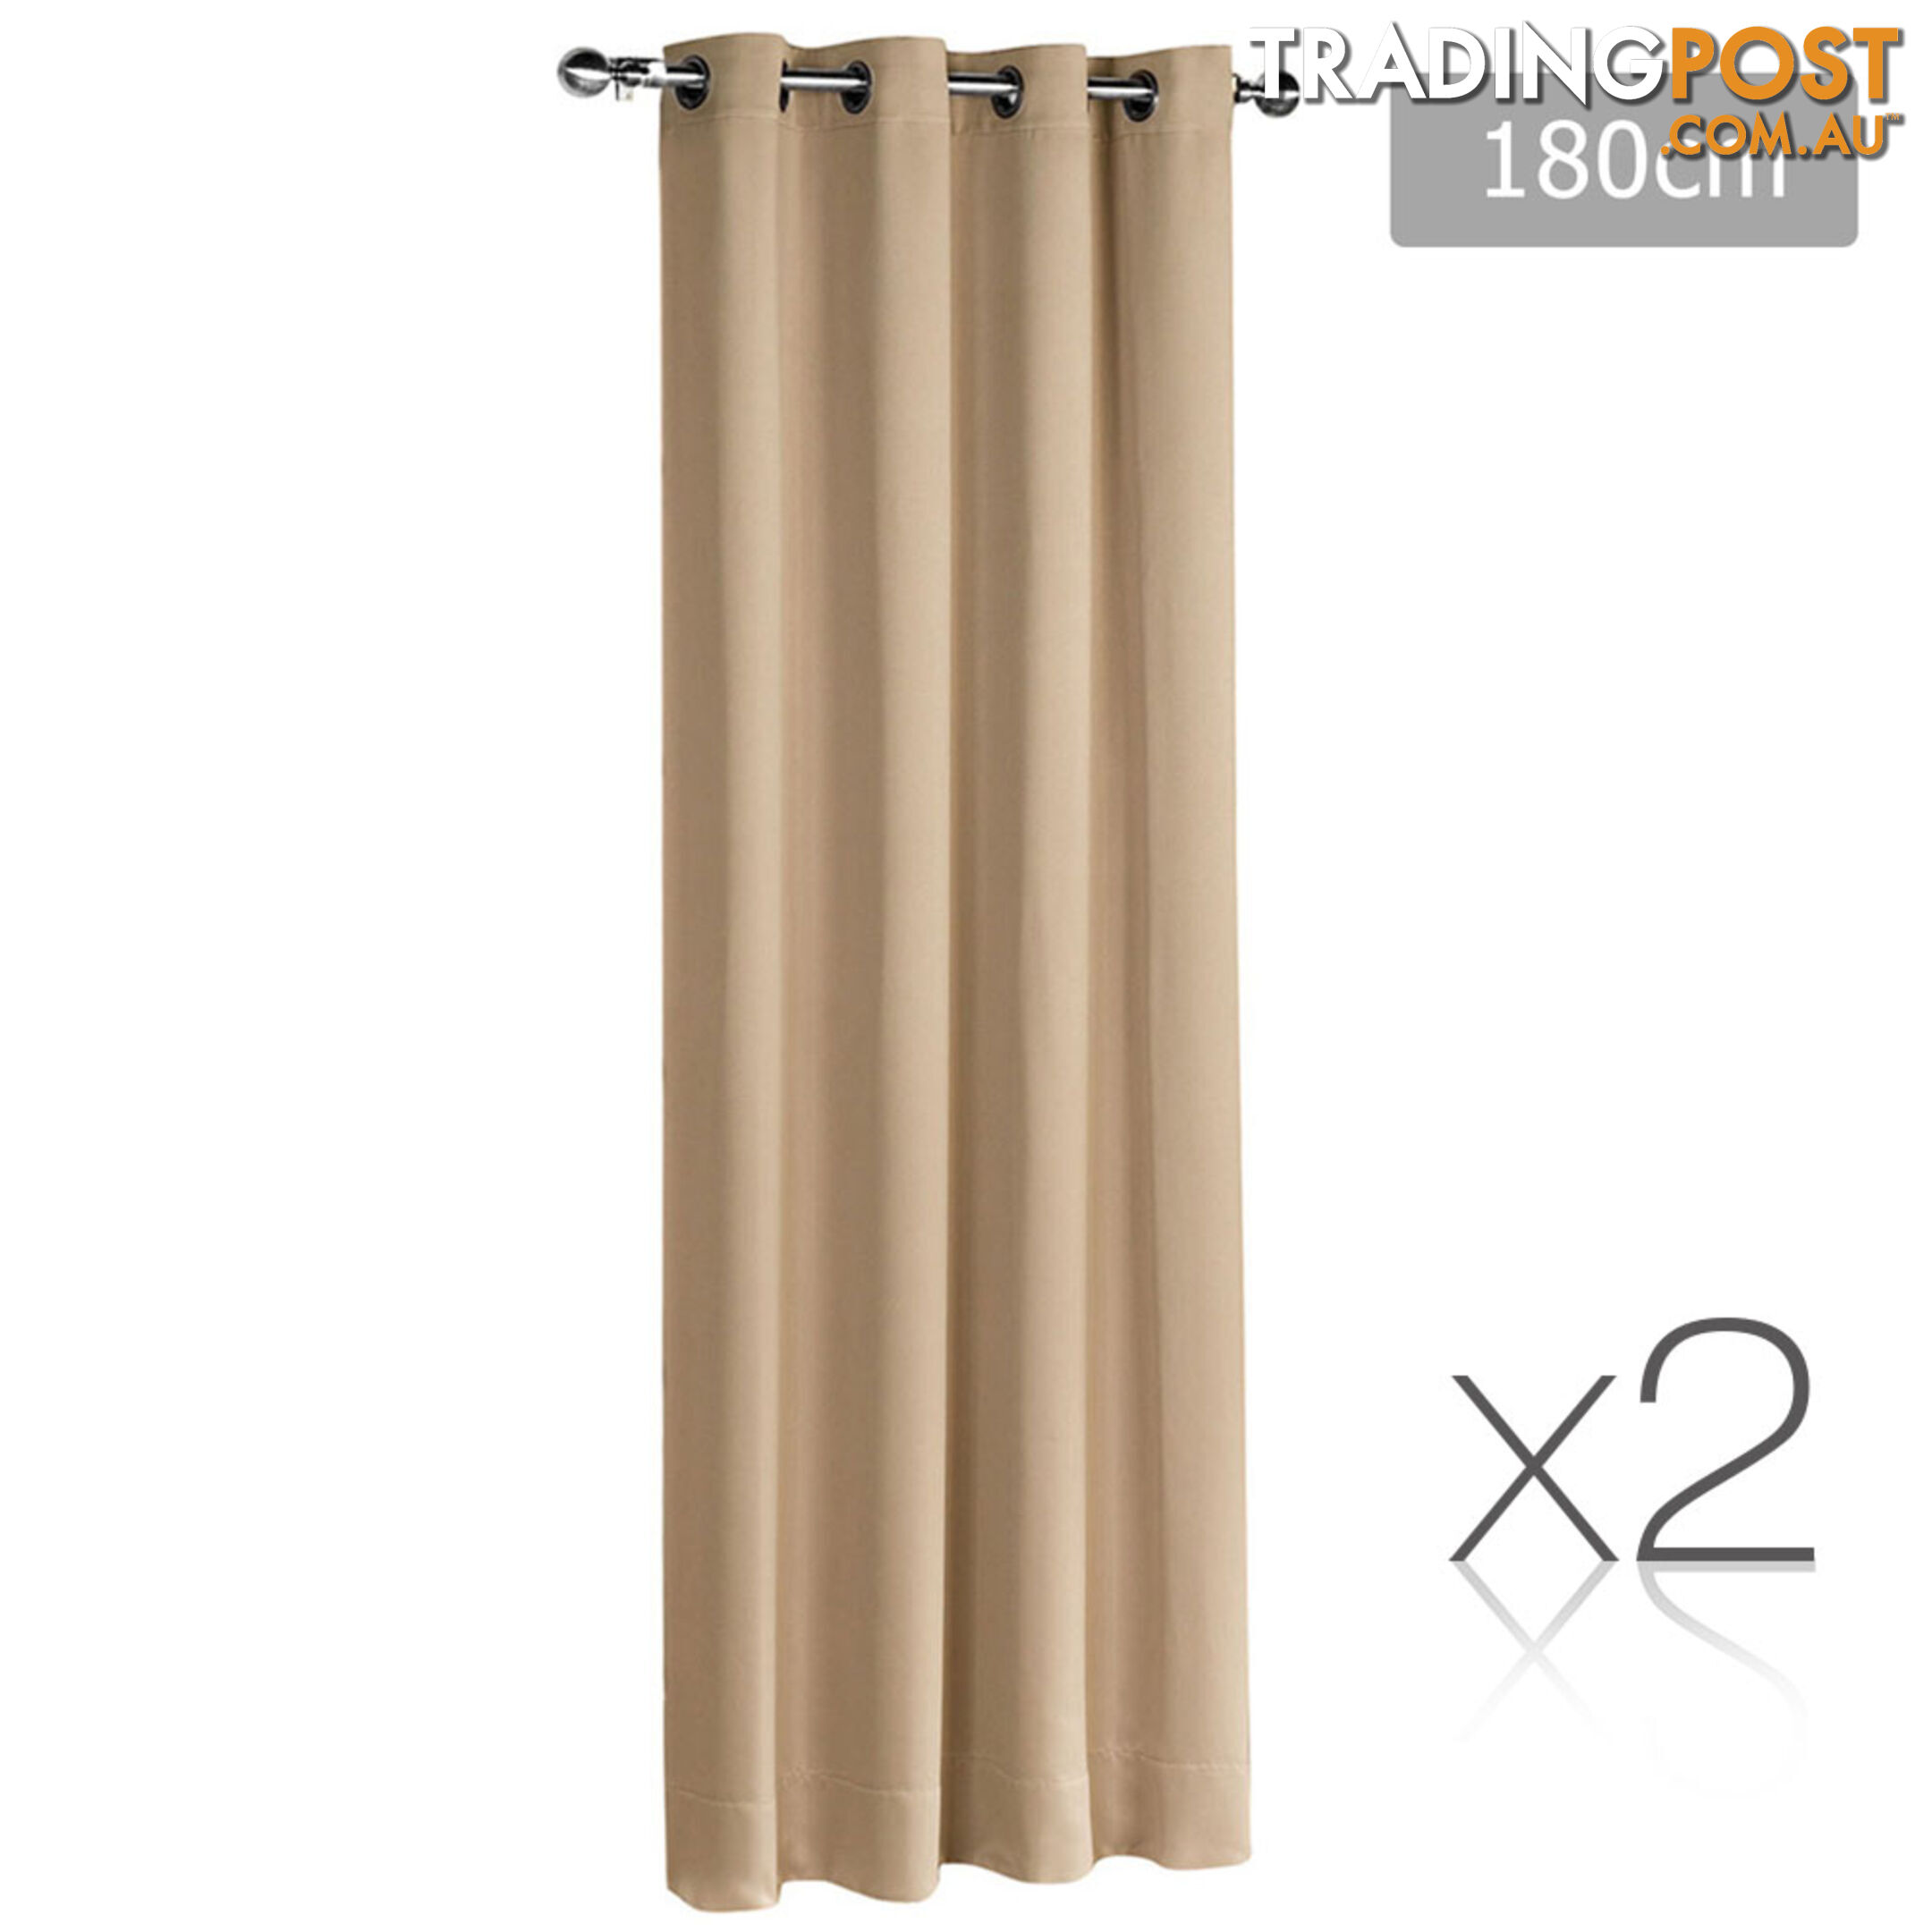 Set of 2 ArtQueen 3 Pass Eyelet Blockout Curtain Latte 180cm